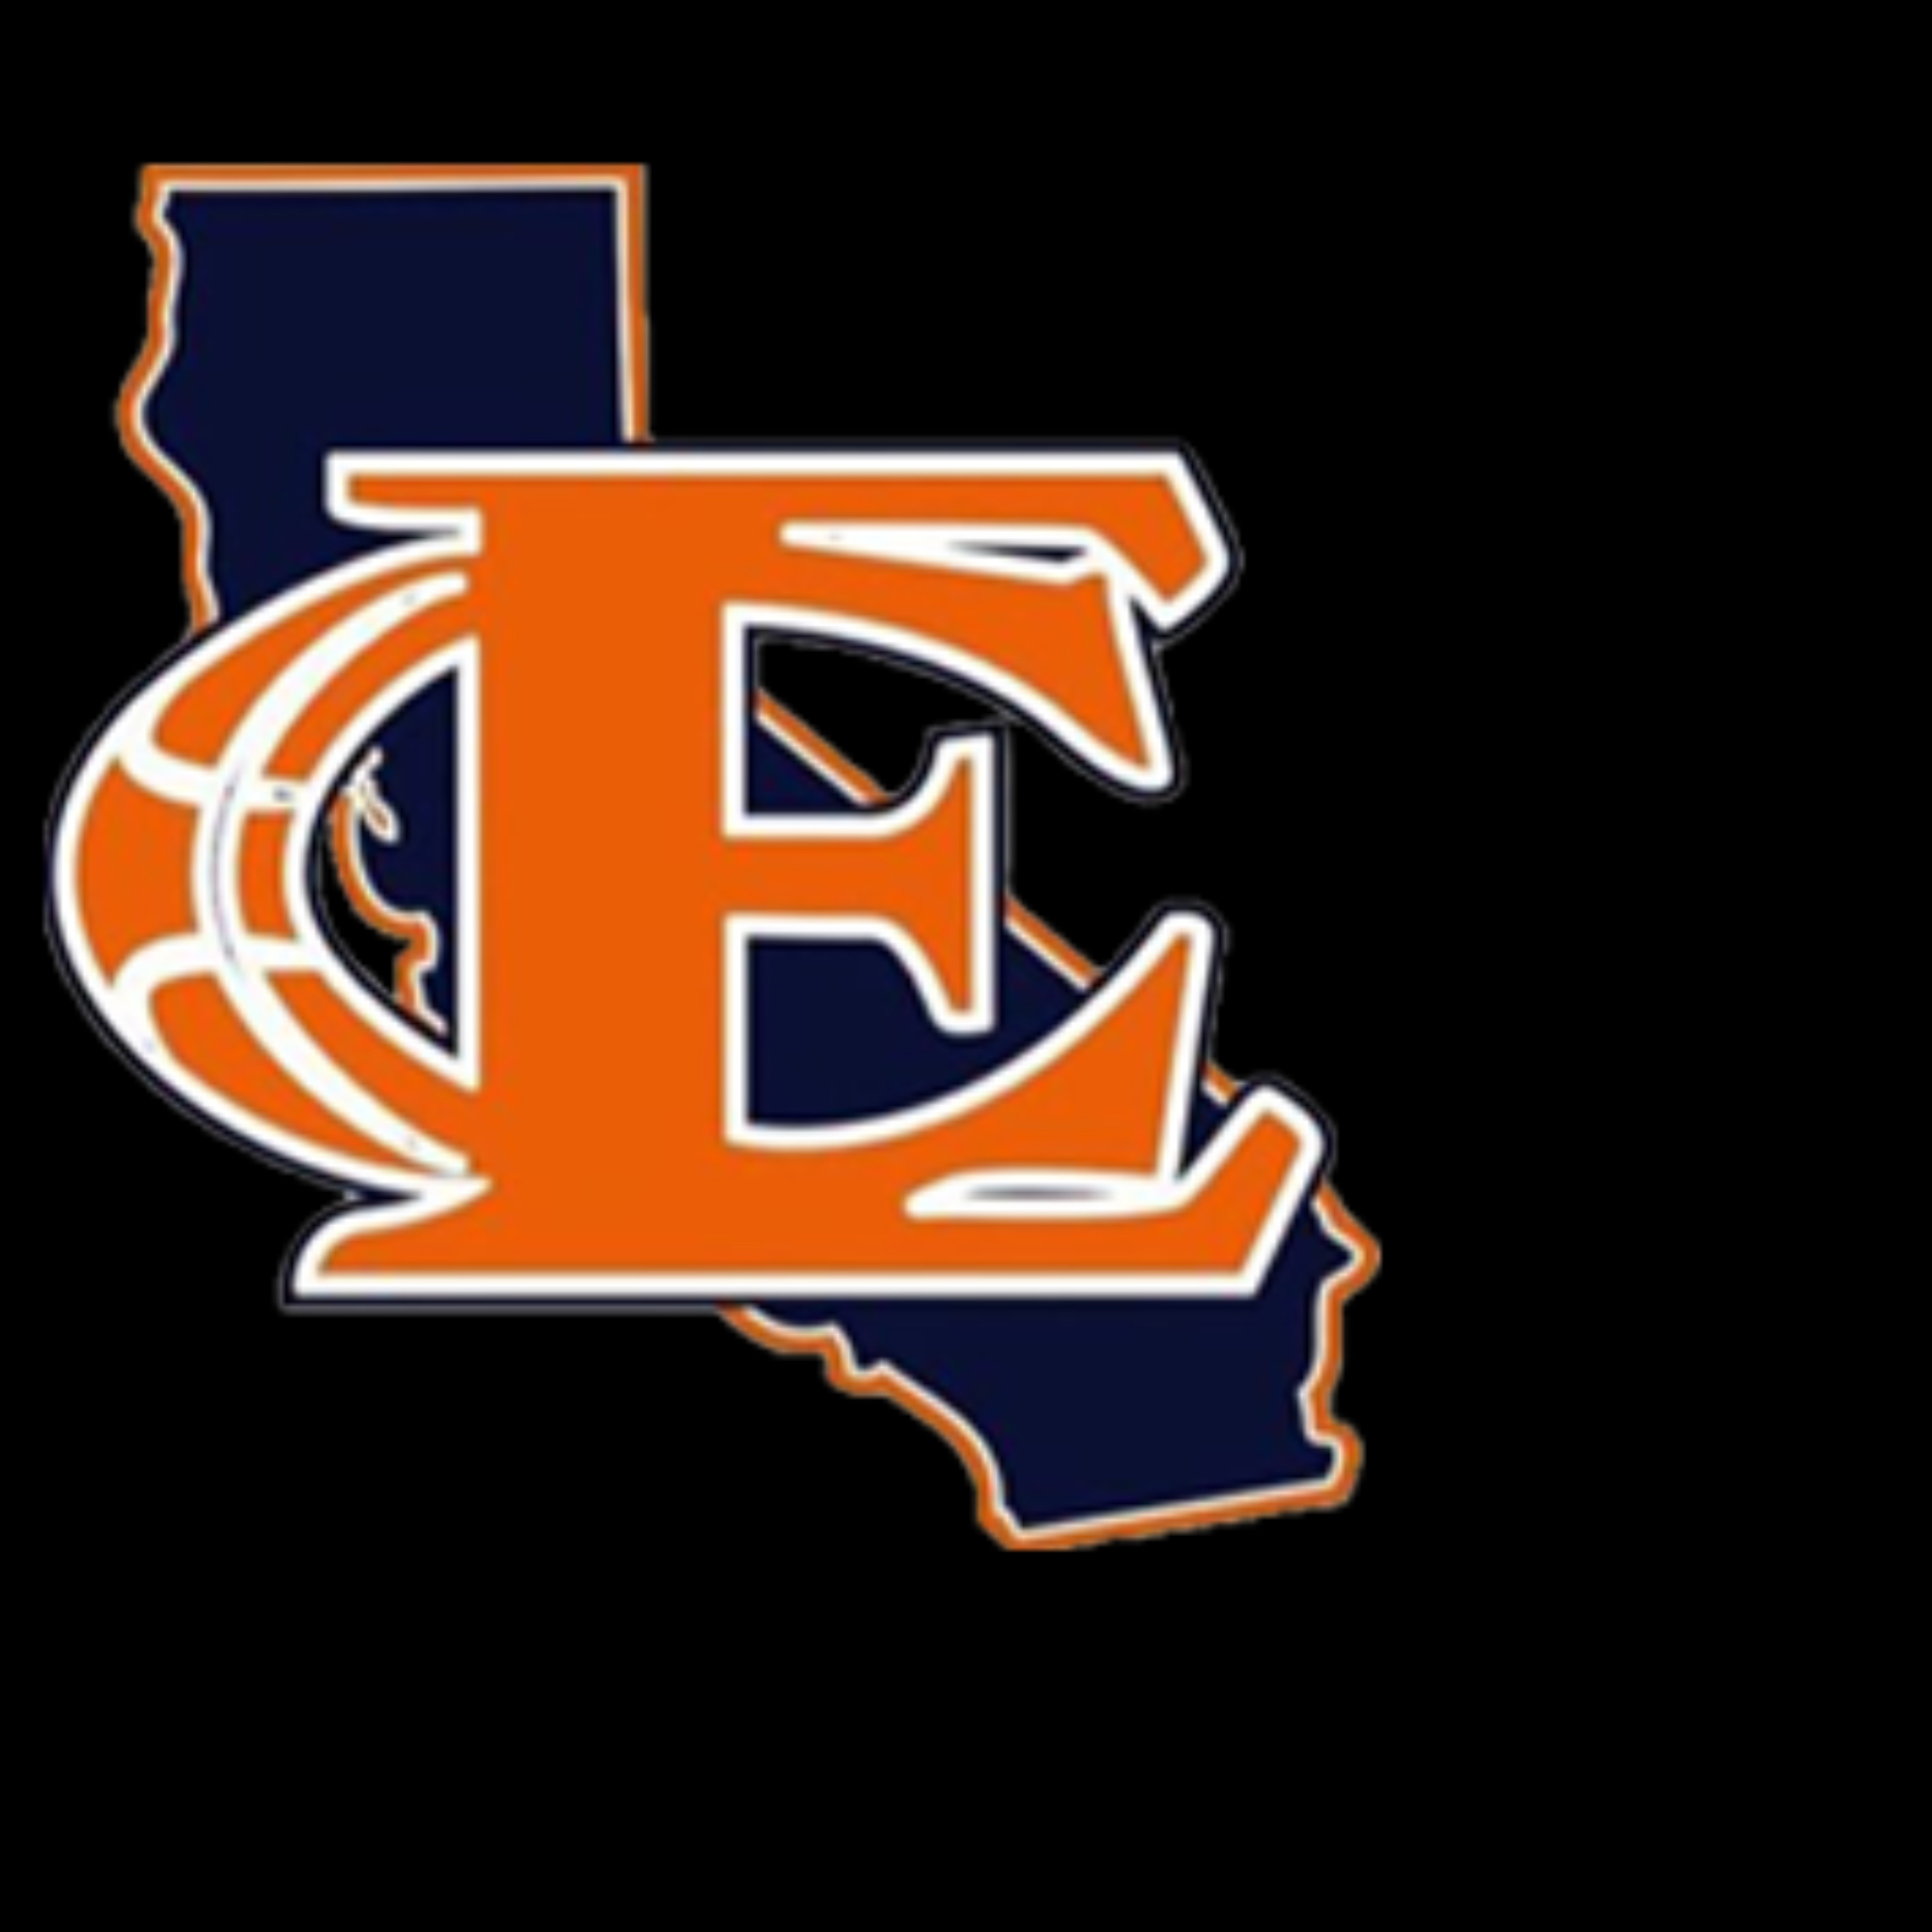 The official logo of Coastal Elite